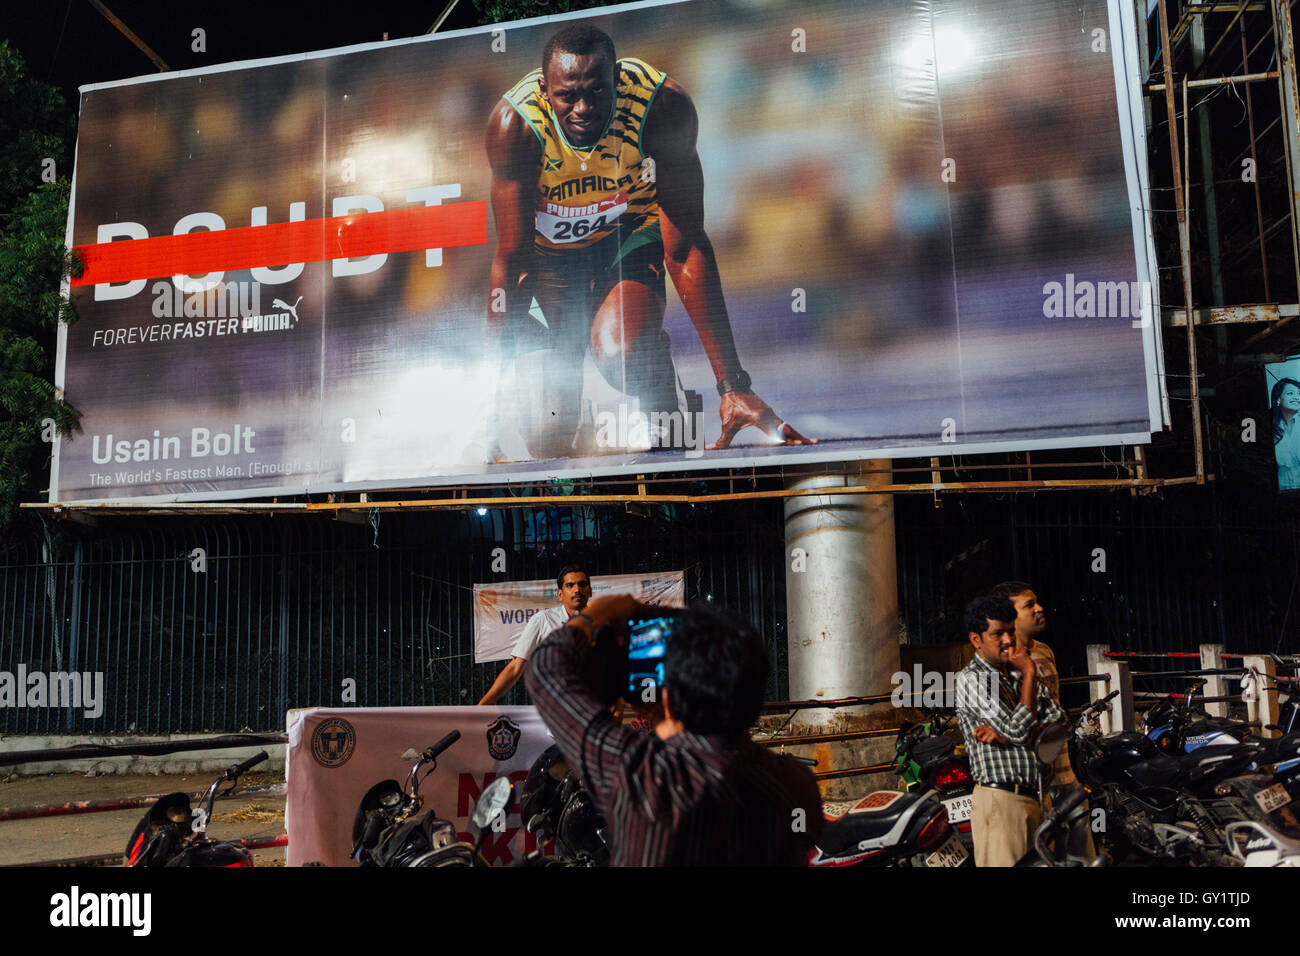 Usain Bolt Puma Hoarding in Hyderabad,India Stock Photo